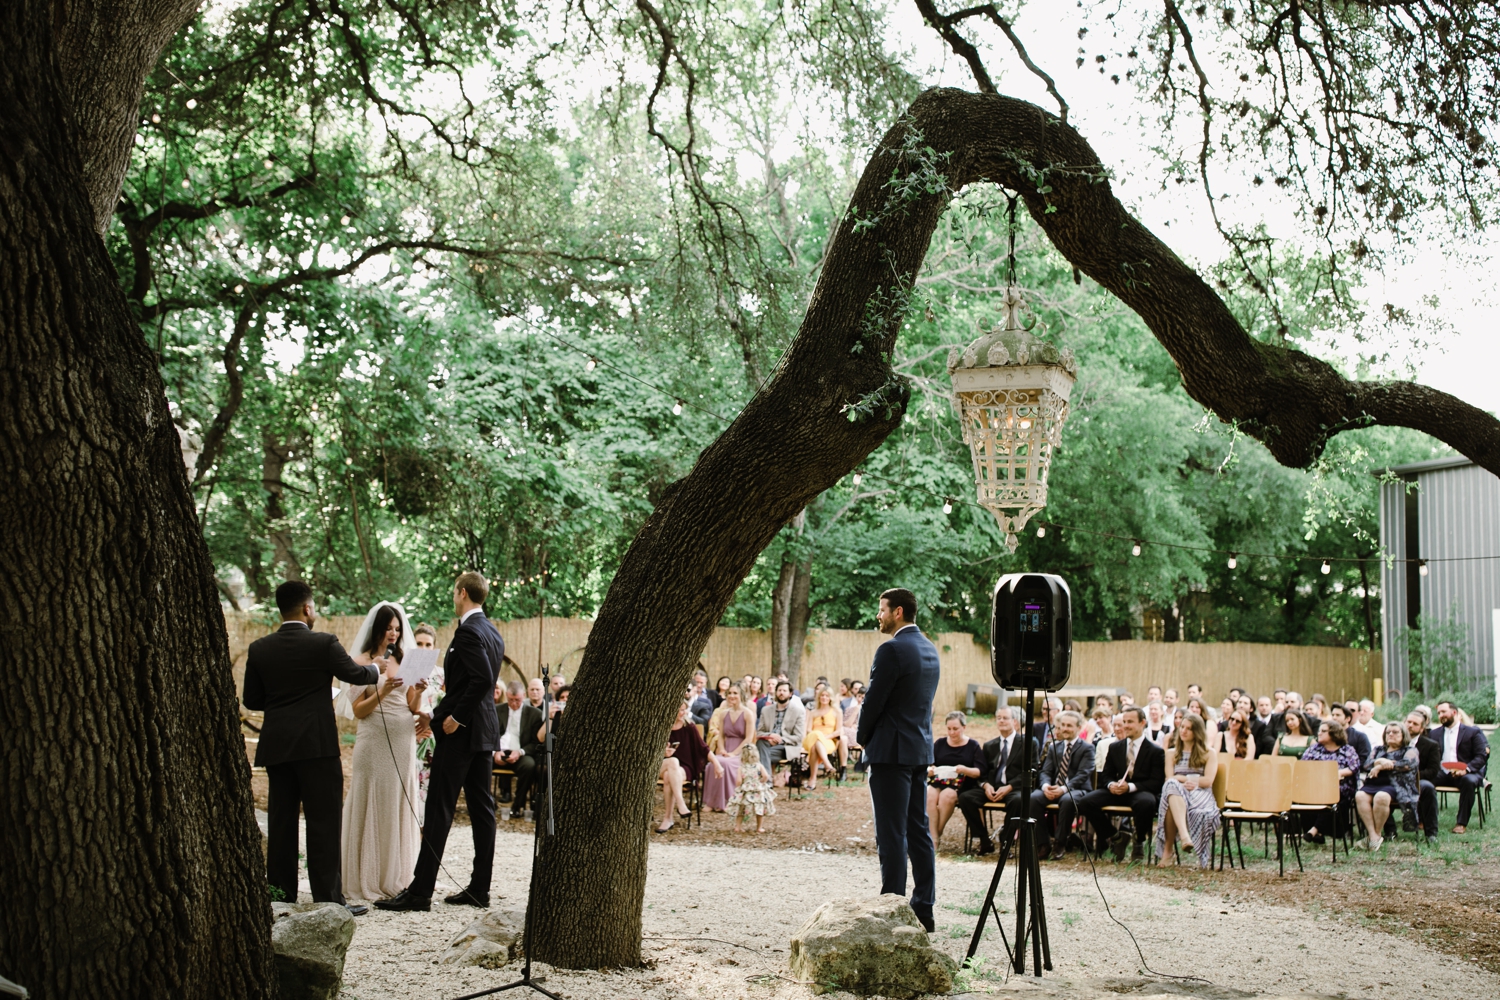 Downtown Austin wedding ceremony outdoors under an Oak Tree